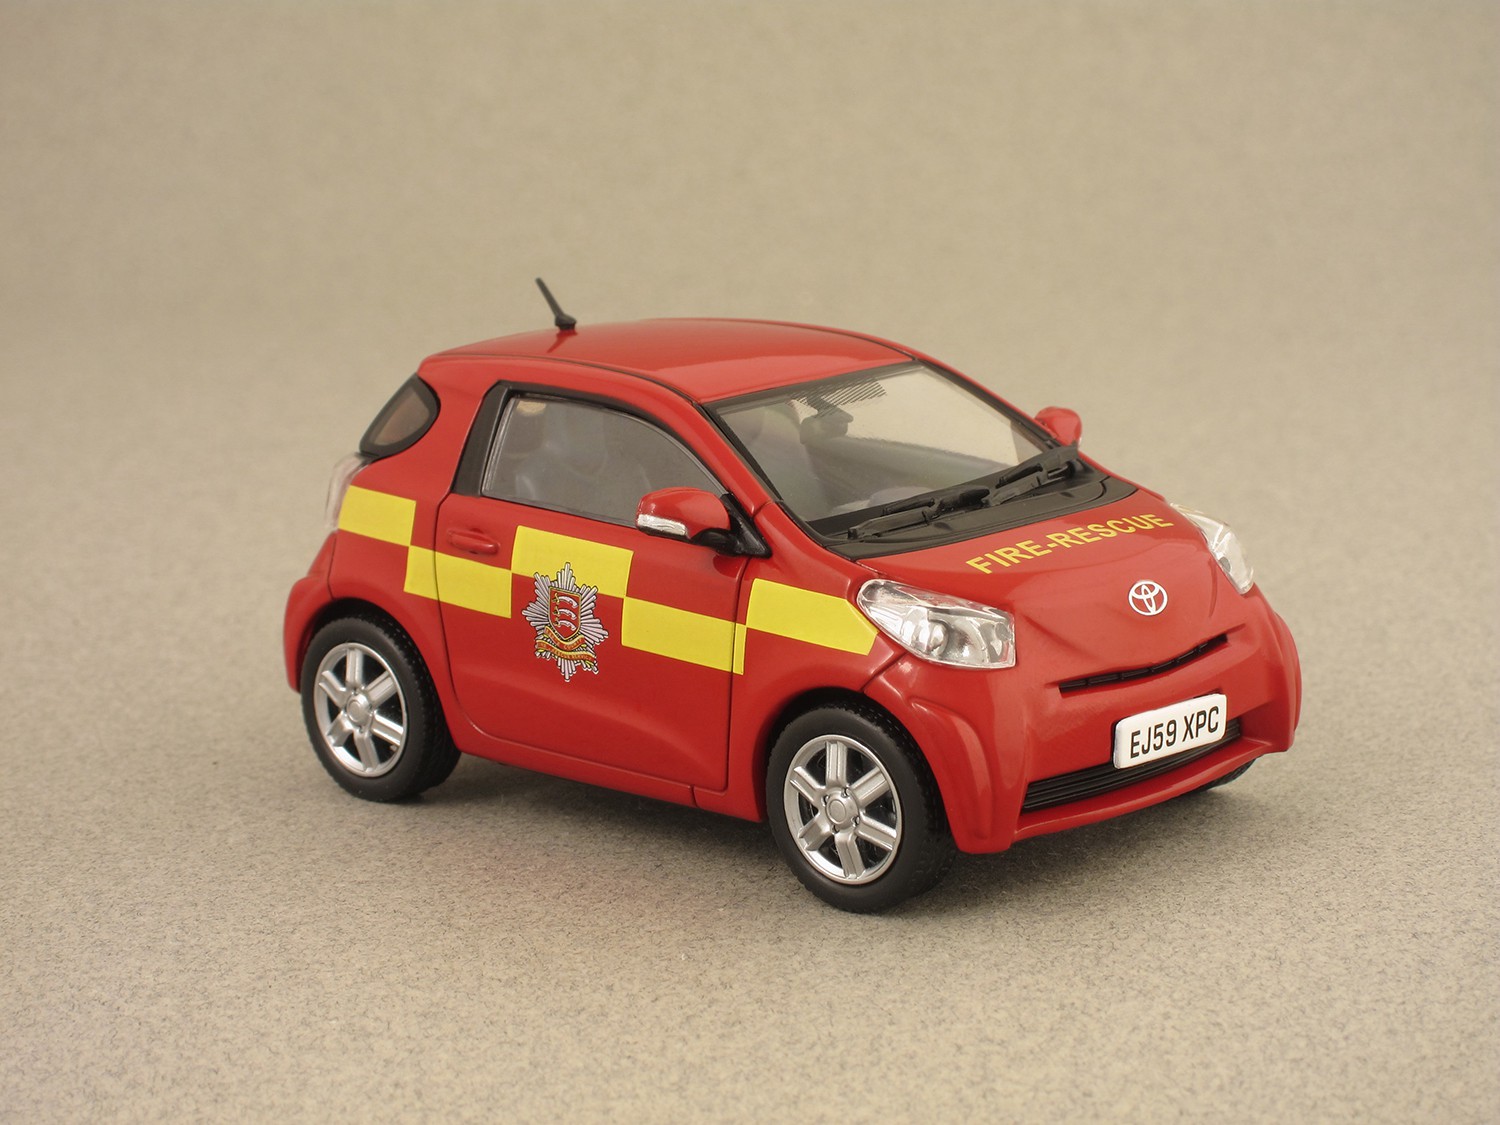 Toyota iQ Essex UK Fire Brigade (J-Collection) 1:43